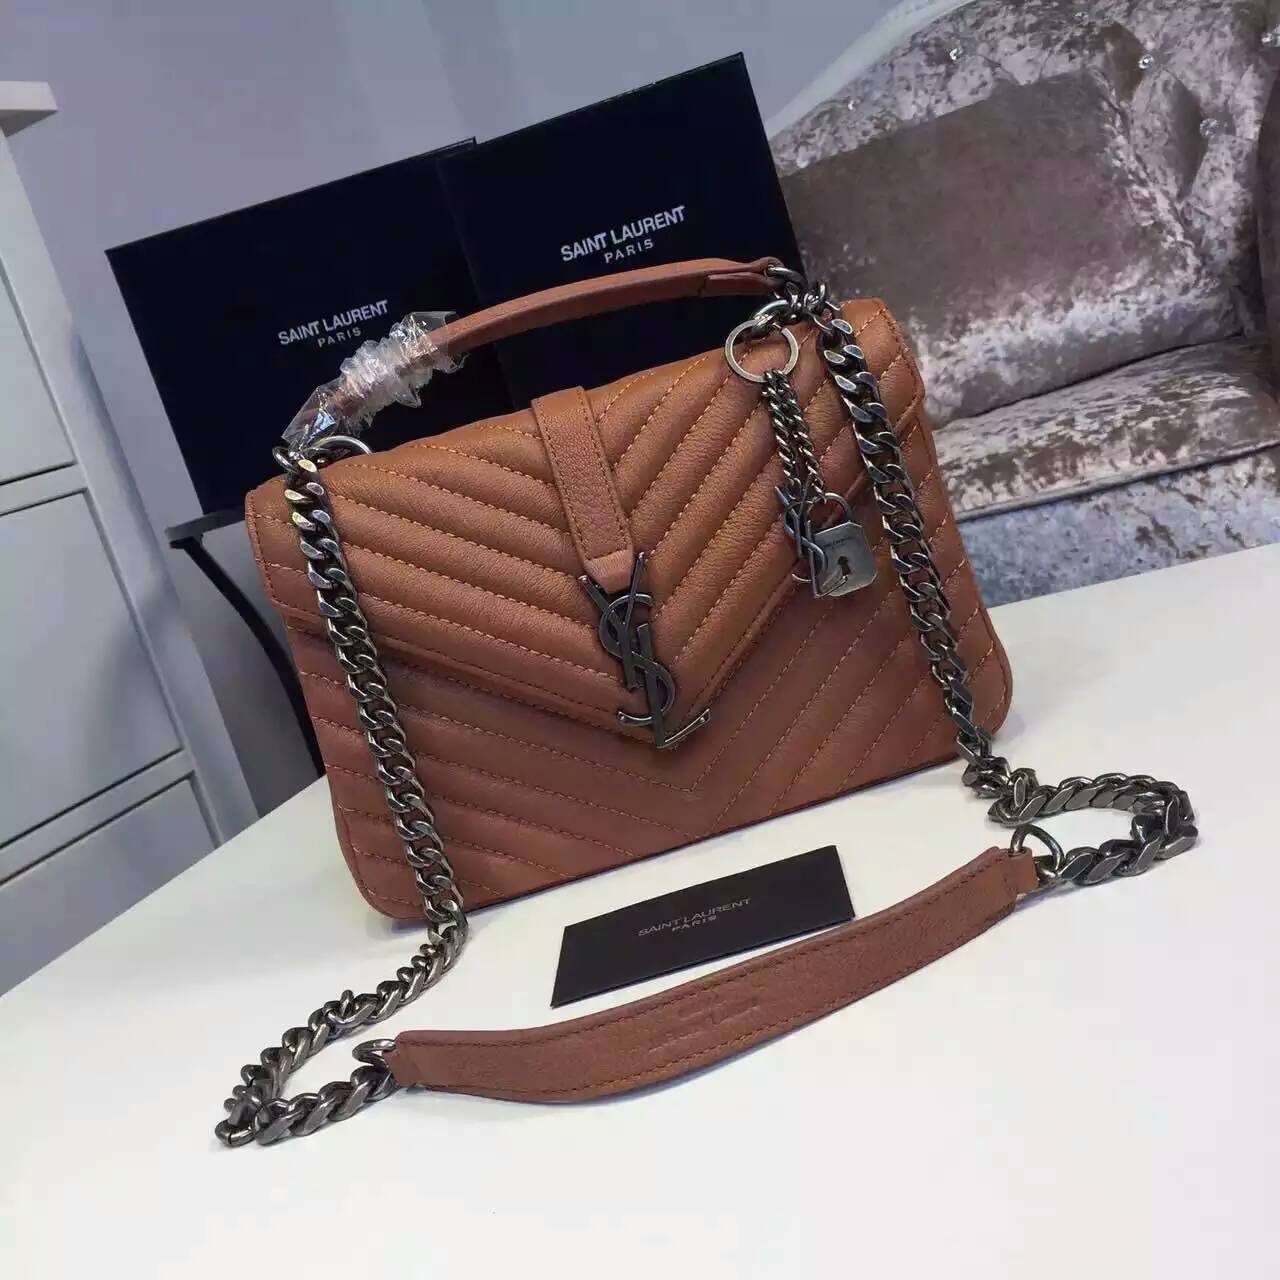 2016 New Saint Laurent Bag Cheap Sale-Saint Laurent Classic Medium COLLEGE MONOGRAM Bag in Light Brown MATELASSE Leather